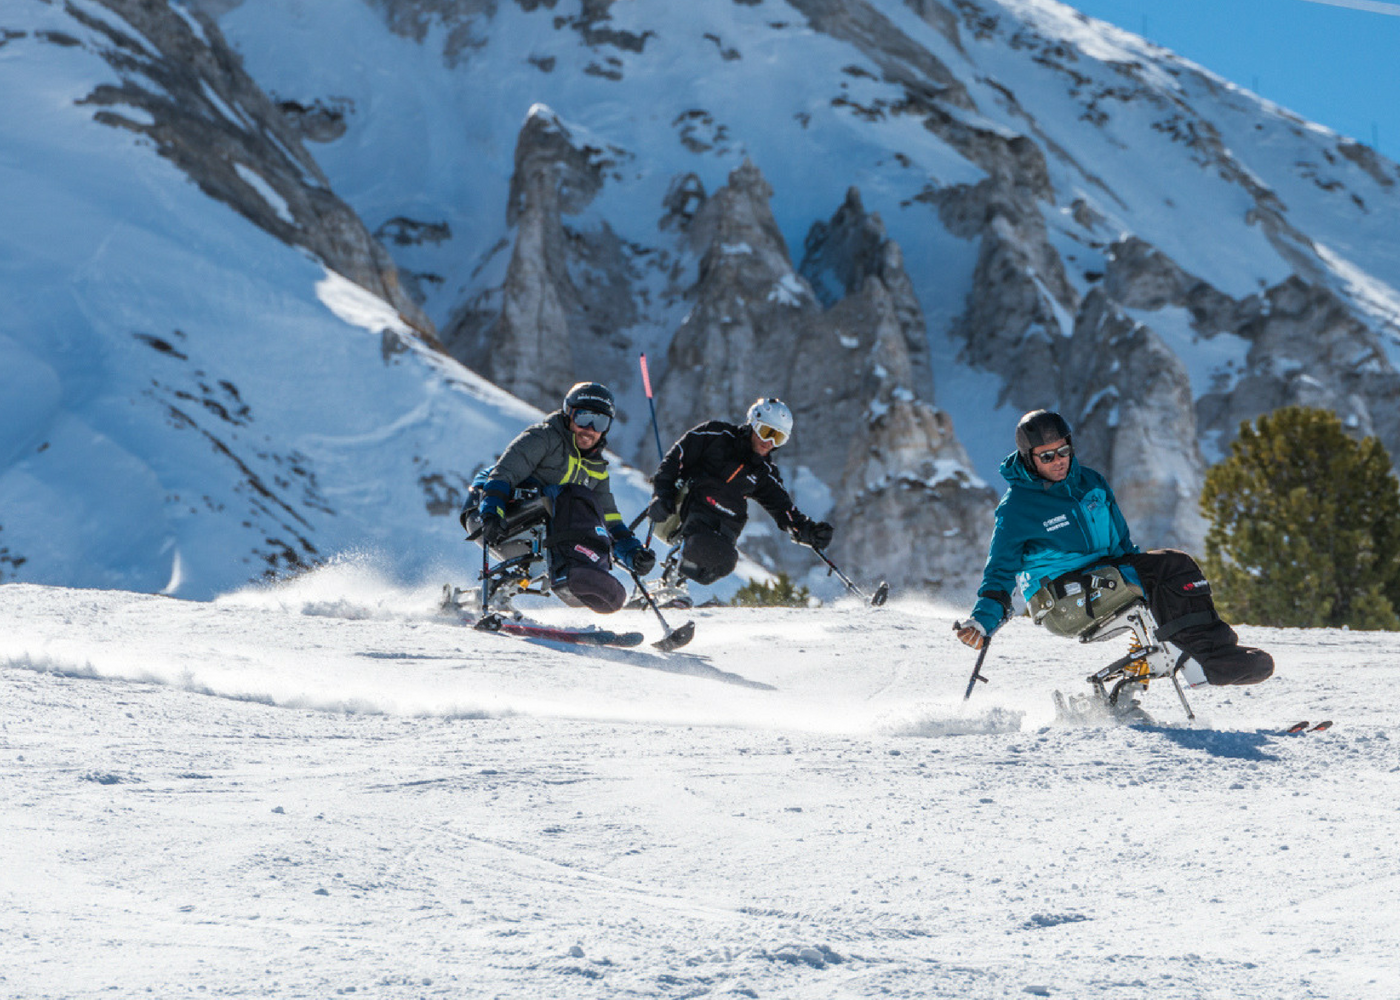 Cours-ski-siege-handiski-station-montagne-oxygene-ski-collection